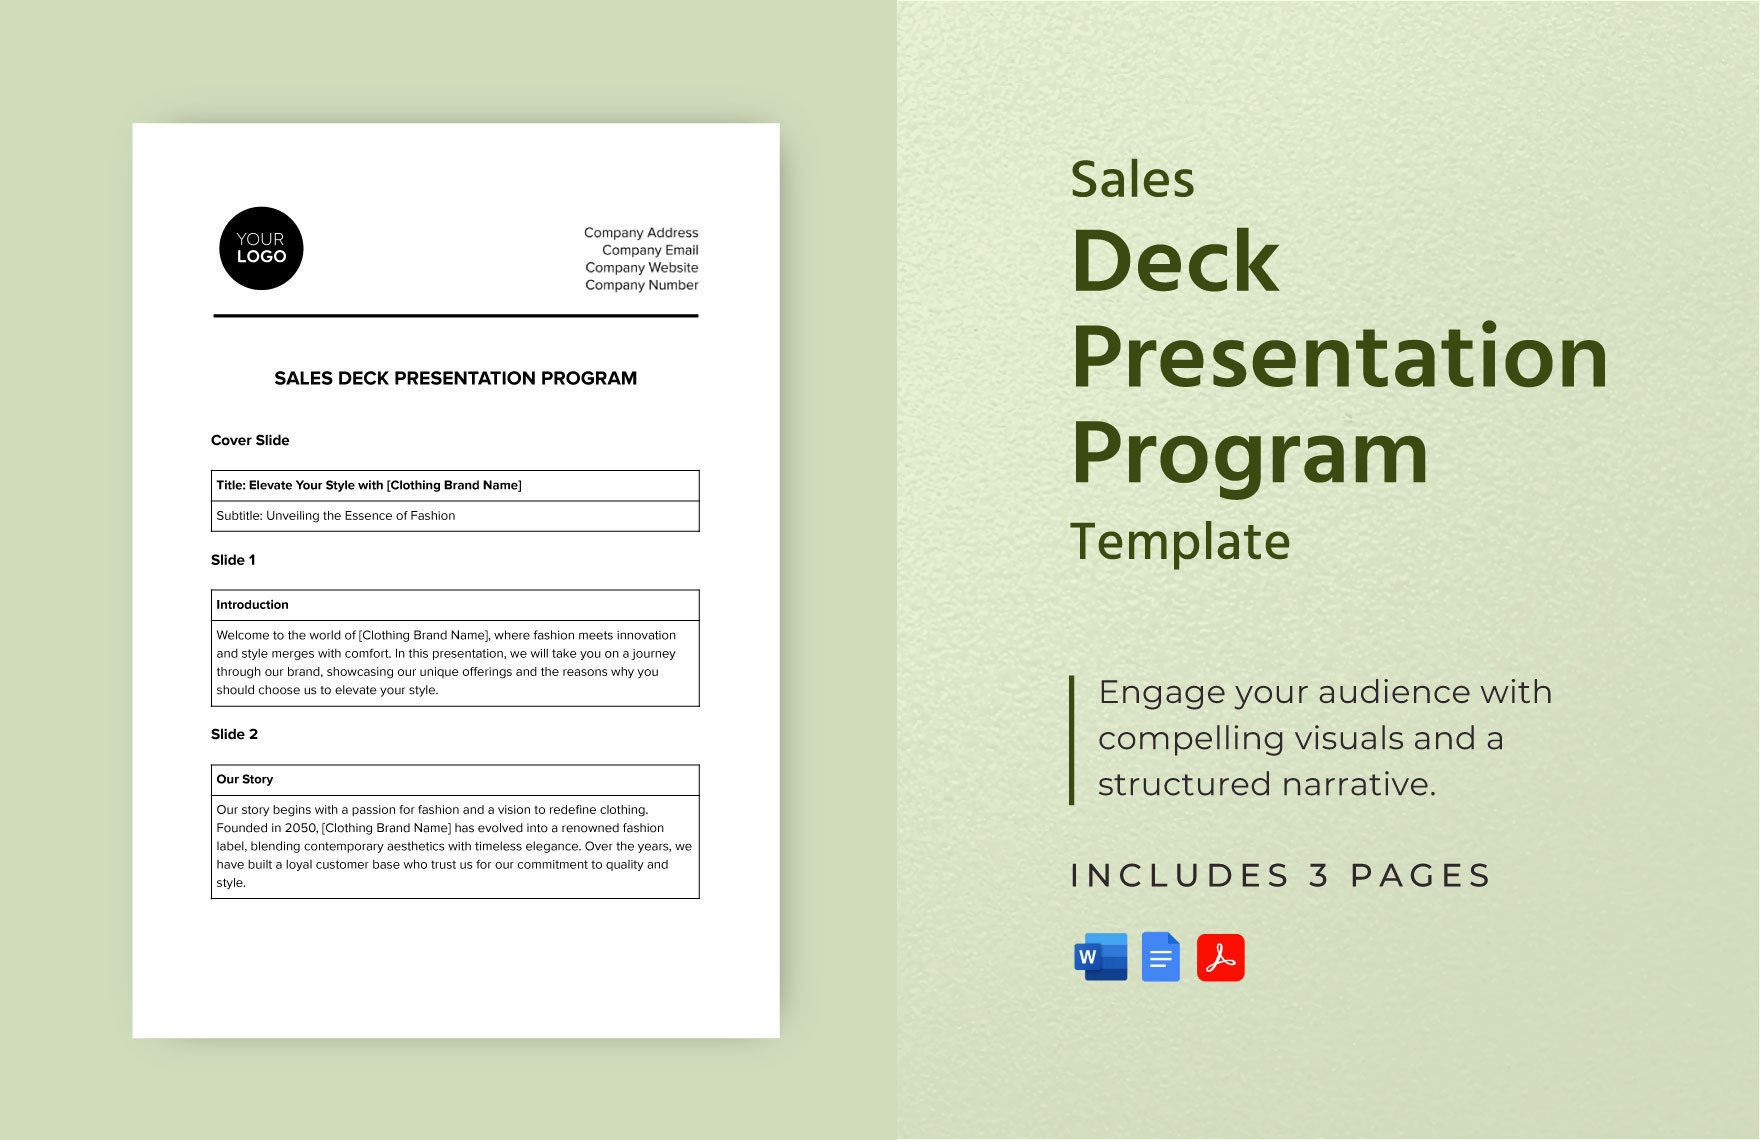 Sales Deck Presentation Program Template in Word, Google Docs, PDF